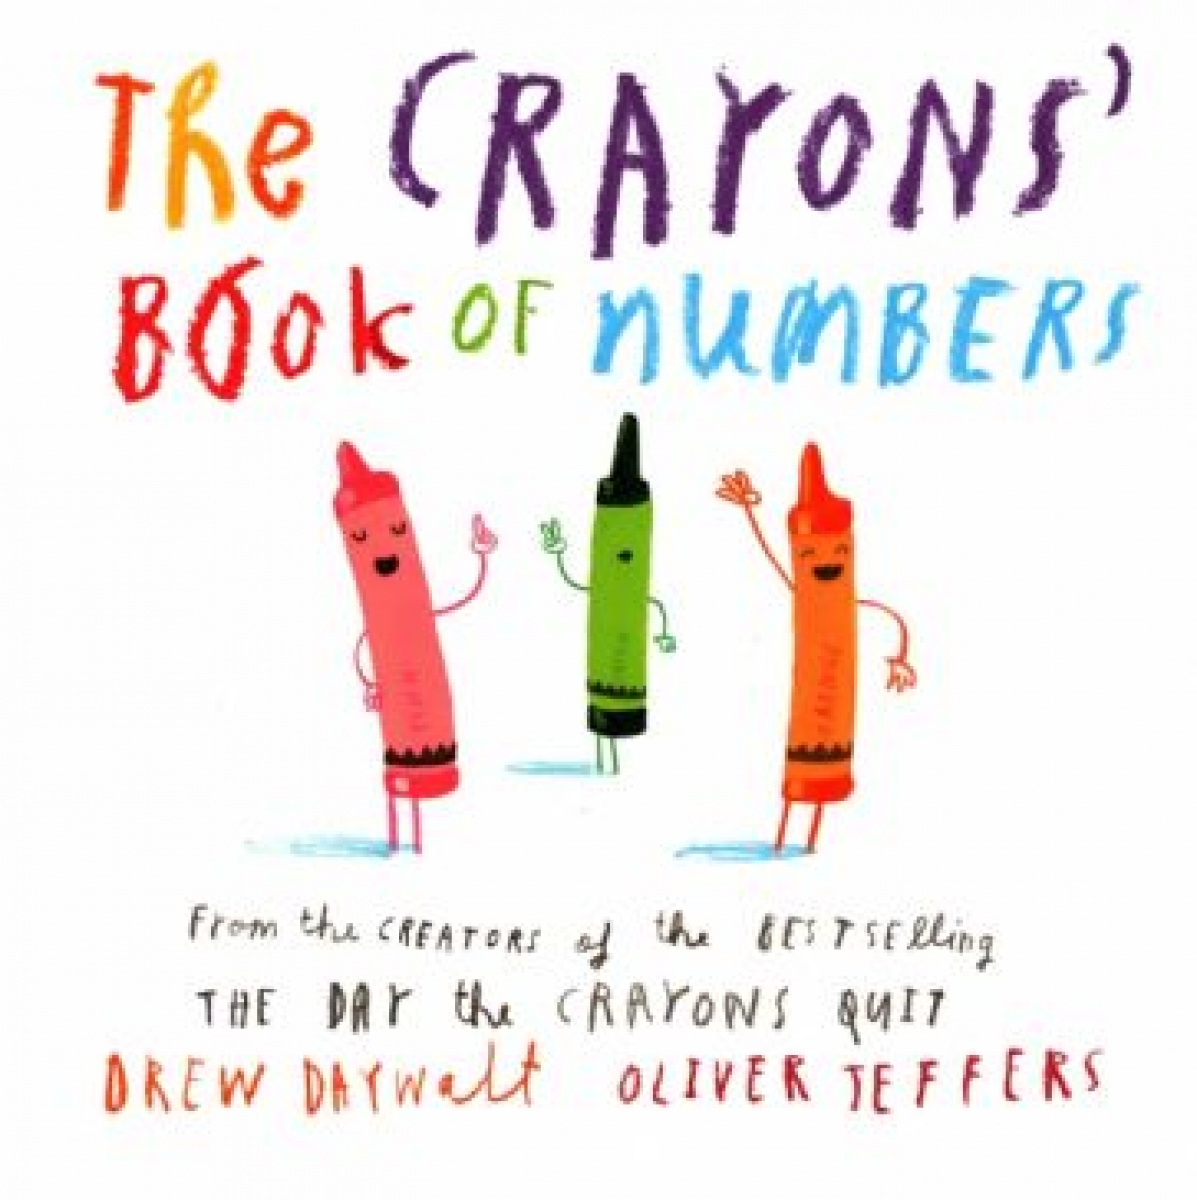 Daywalt Drew The Crayons' Book of Numbers 